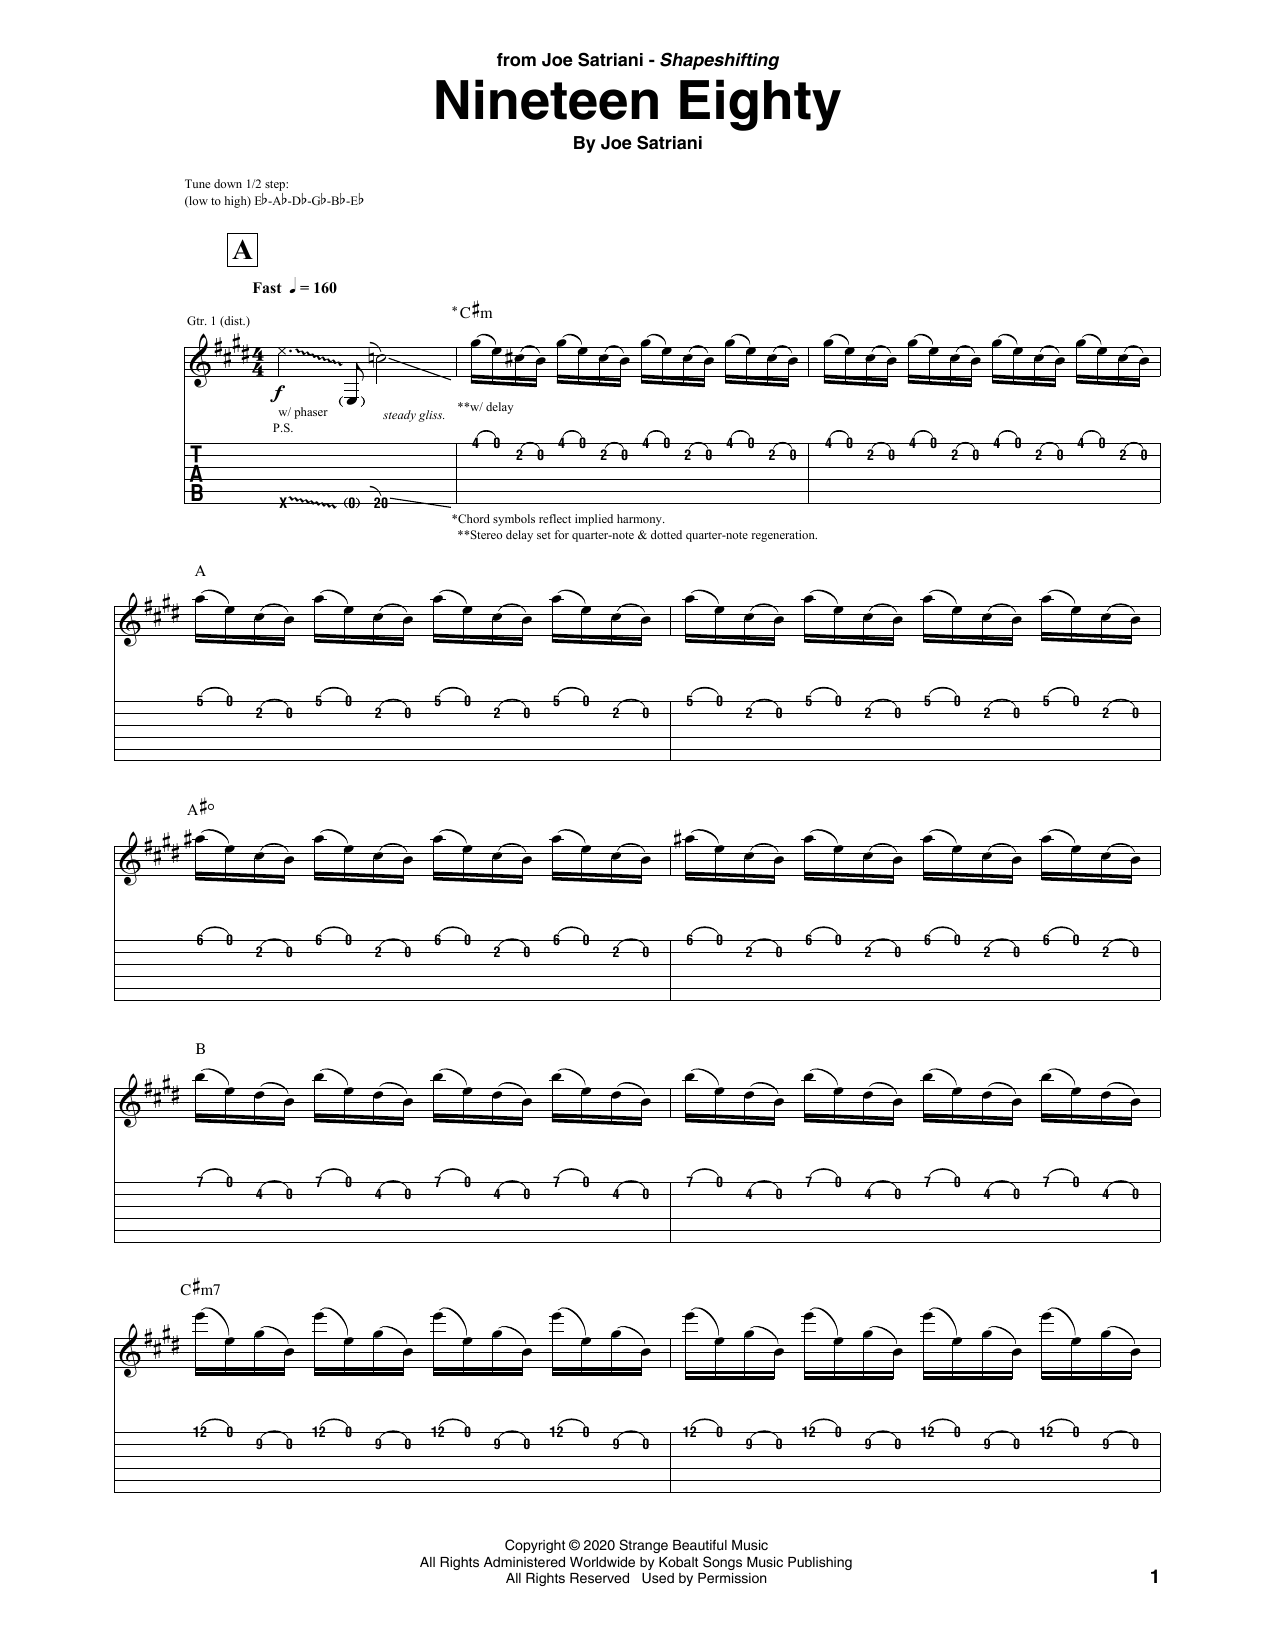 Joe Satriani Nineteen Eighty Sheet Music Notes & Chords for Guitar Tab - Download or Print PDF